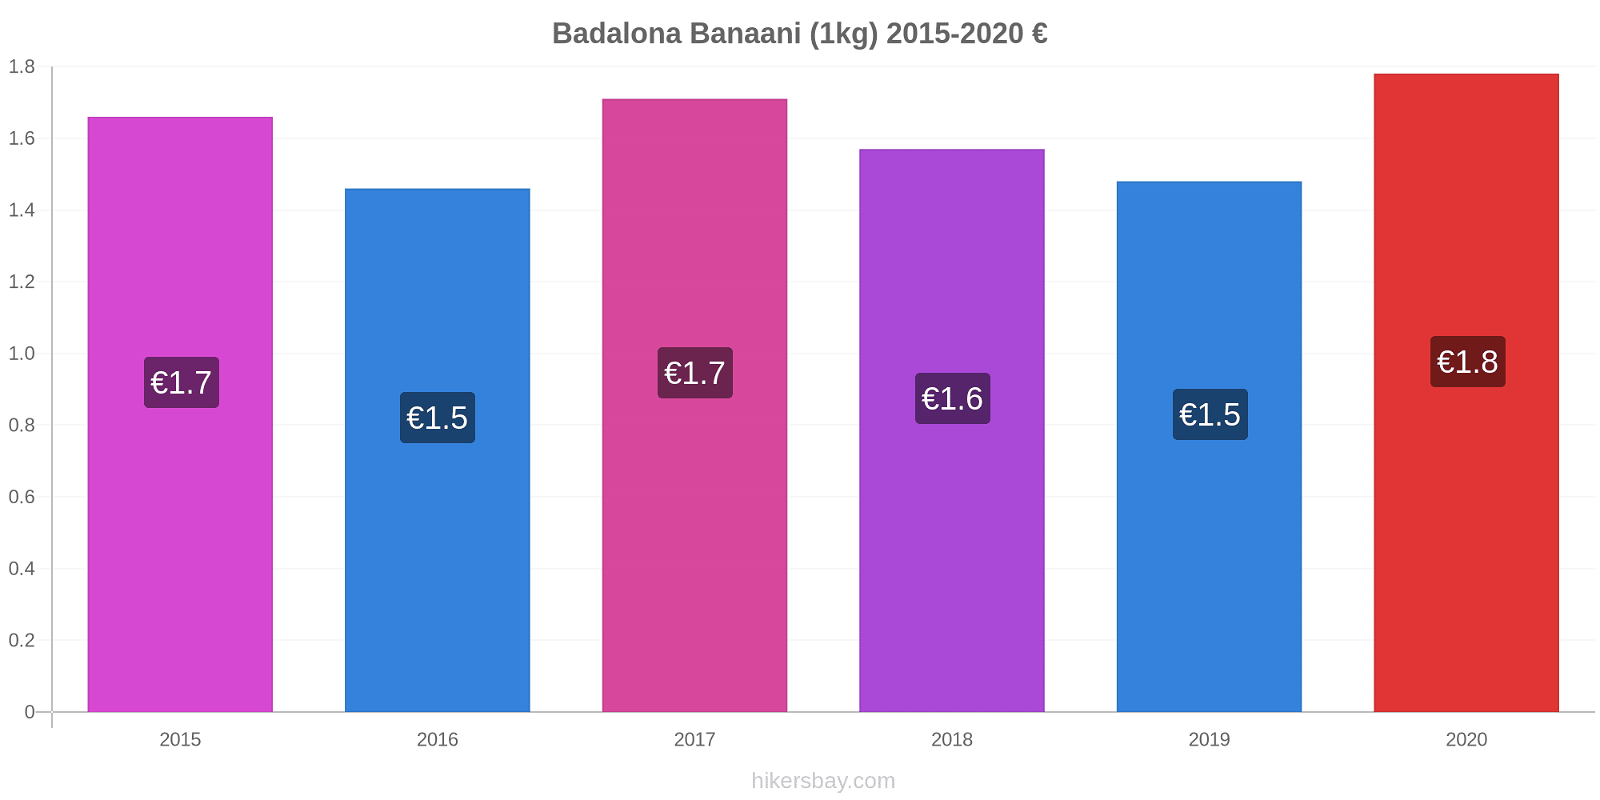 Badalona hintojen muutokset Banaani (1kg) hikersbay.com